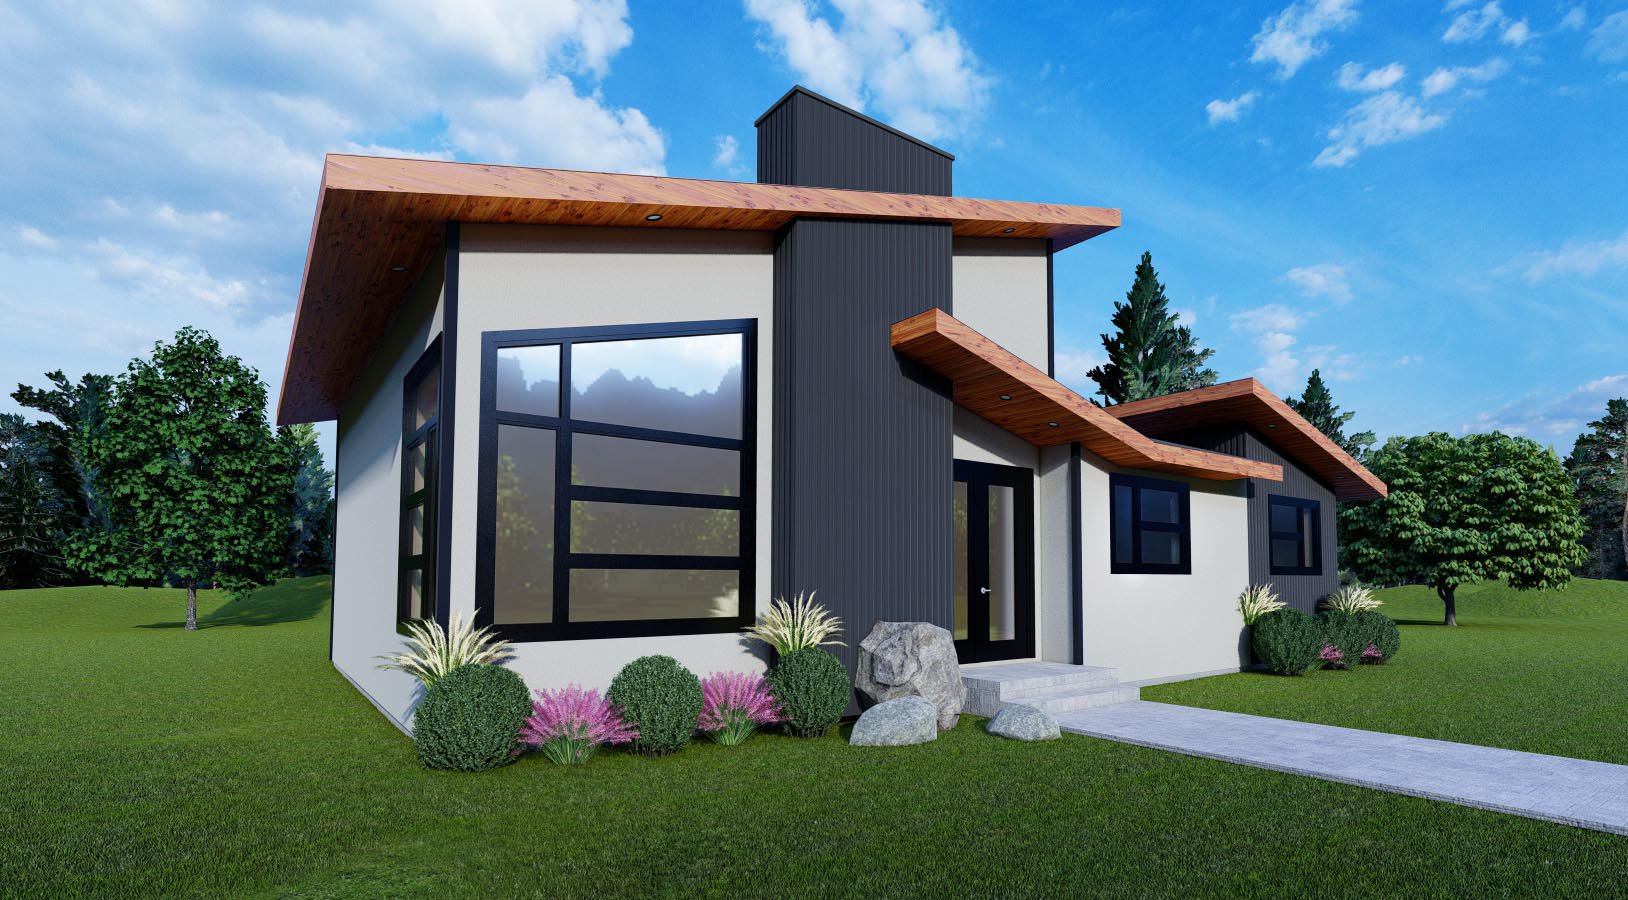 nelson homes modular ready to move rtm prefab house plan.jpg